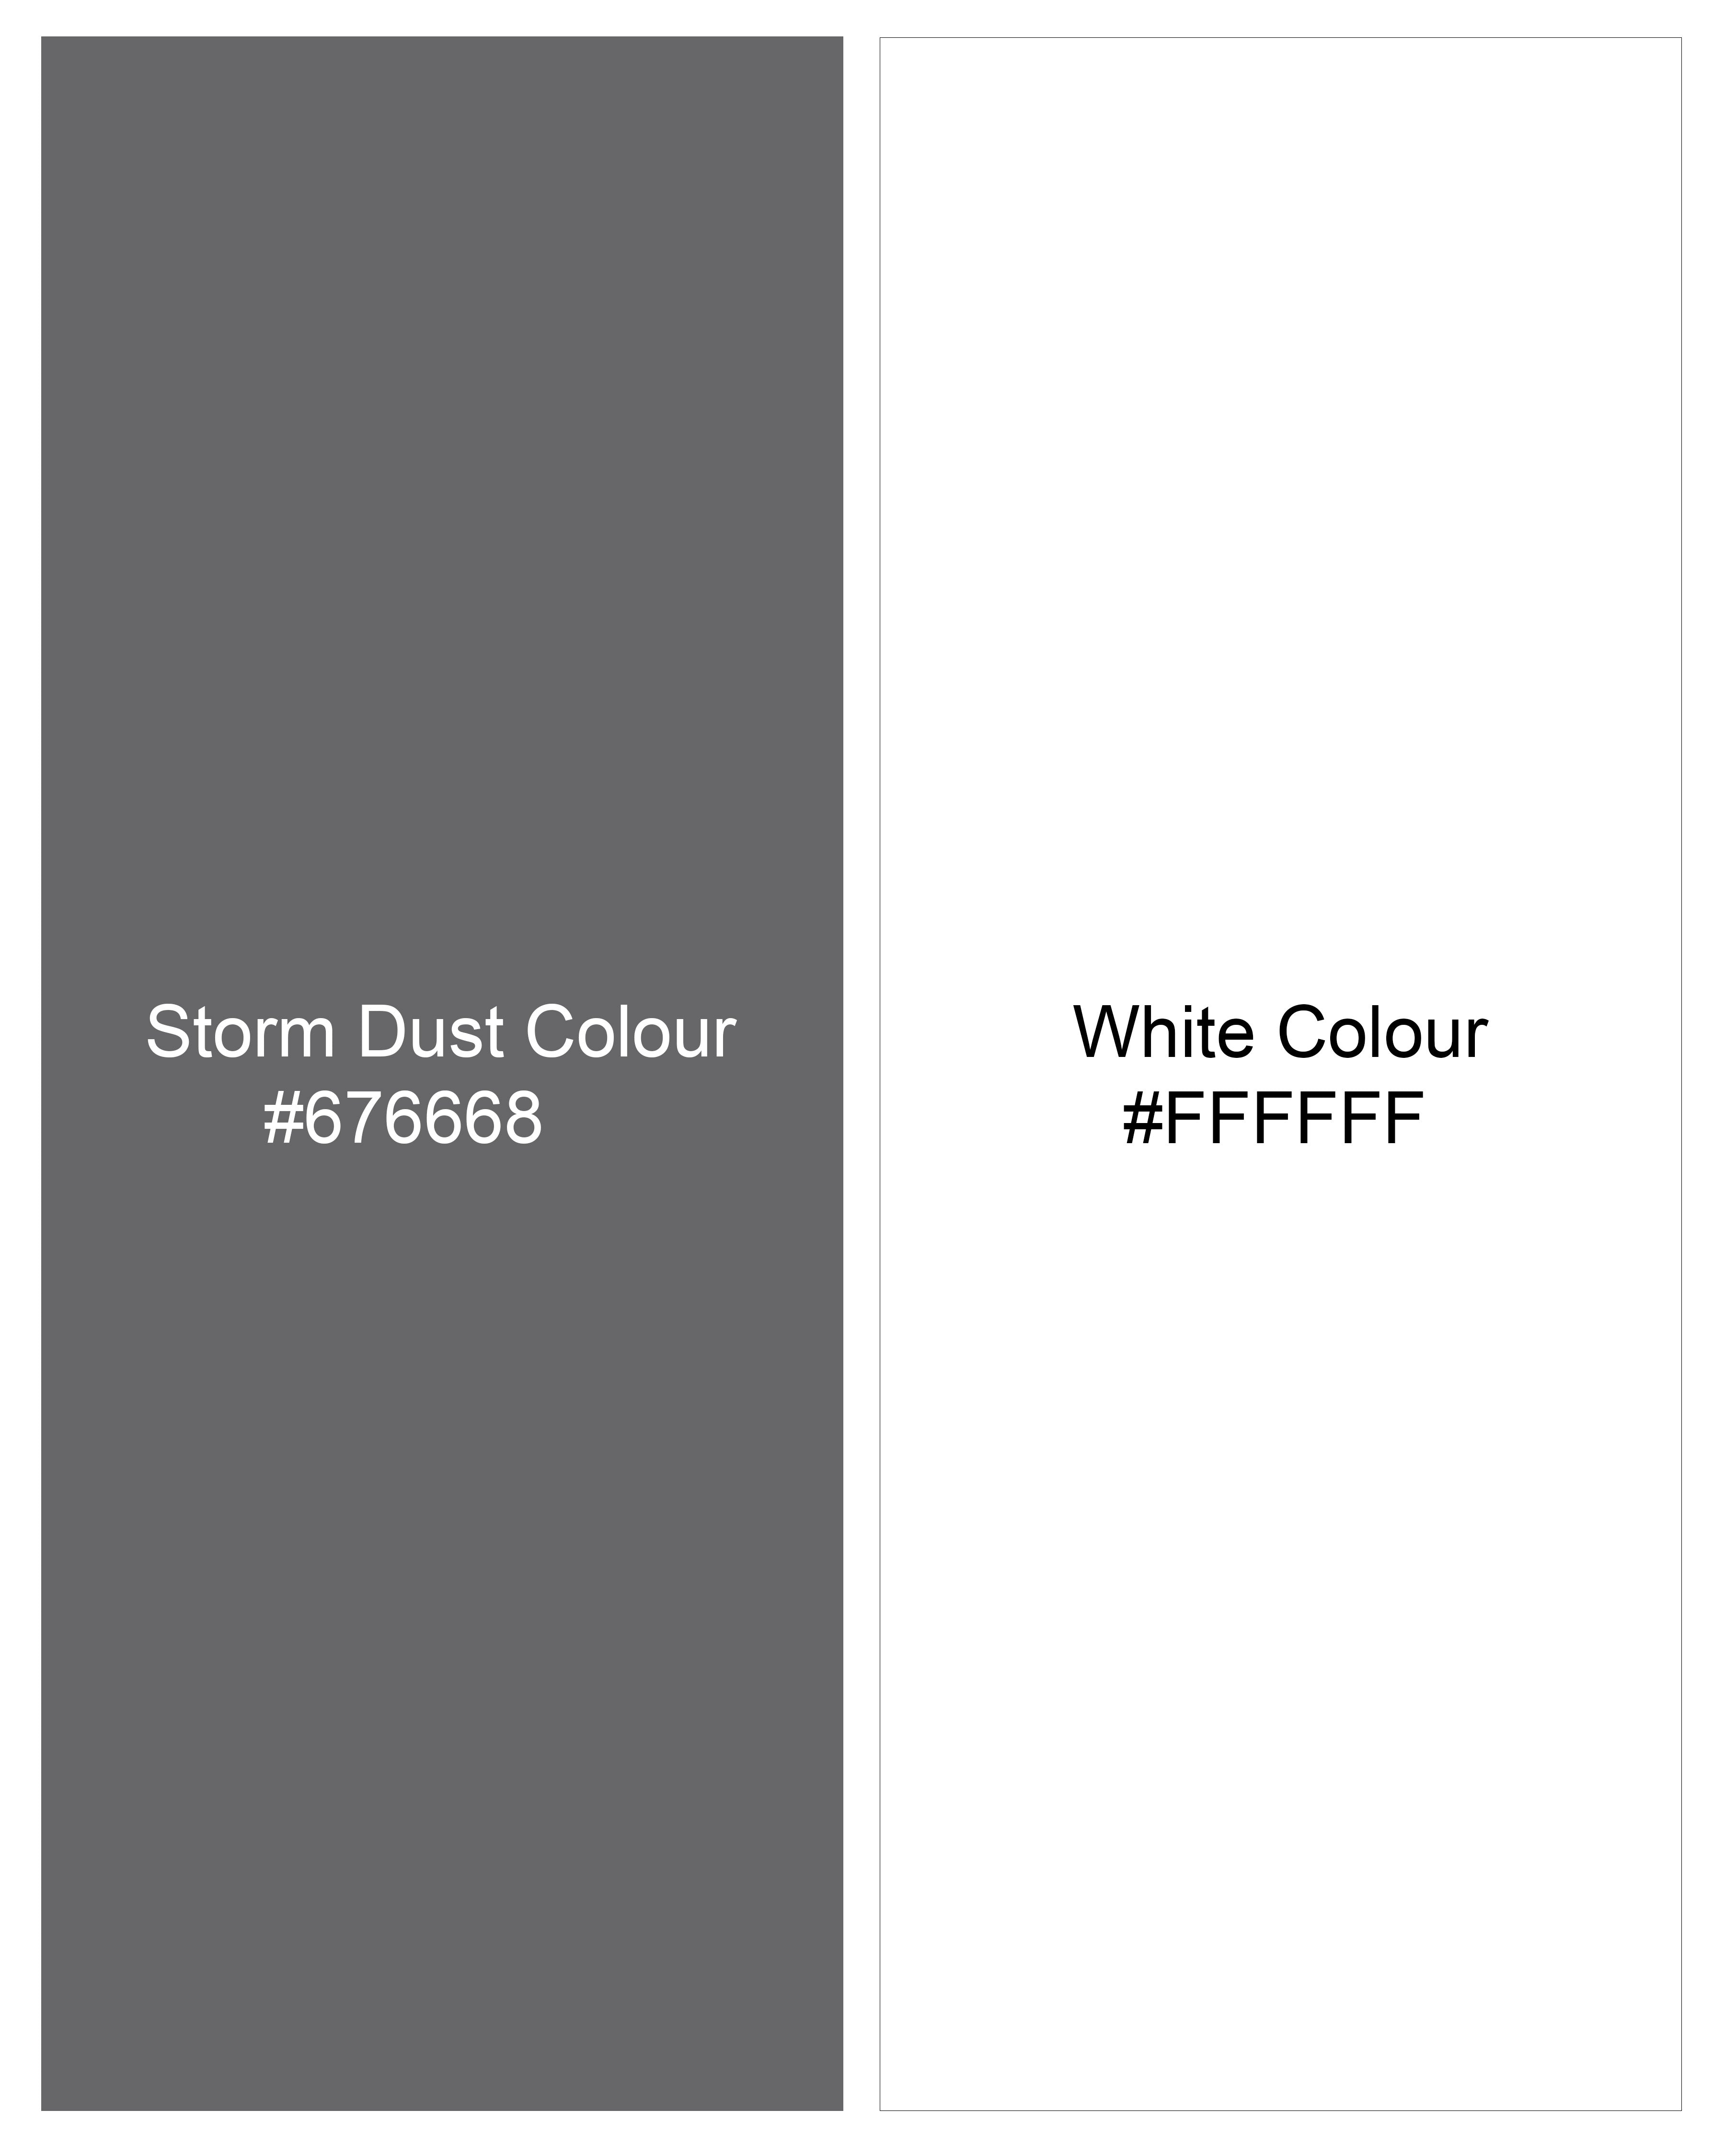 Bright White with Storm Dust Gray Floral Printed Super Soft Premium Cotton Shirt 9354-CC-SS-P480-38, 9354-CC-SS-P480-H-38, 9354-CC-SS-P480-39, 9354-CC-SS-P480-H-39, 9354-CC-SS-P480-40, 9354-CC-SS-P480-H-40, 9354-CC-SS-P480-42, 9354-CC-SS-P480-H-42, 9354-CC-SS-P480-44, 9354-CC-SS-P480-H-44, 9354-CC-SS-P480-46, 9354-CC-SS-P480-H-46, 9354-CC-SS-P480-48, 9354-CC-SS-P480-H-48, 9354-CC-SS-P480-50, 9354-CC-SS-P480-H-50, 9354-CC-SS-P480-52, 9354-CC-SS-P480-H-52